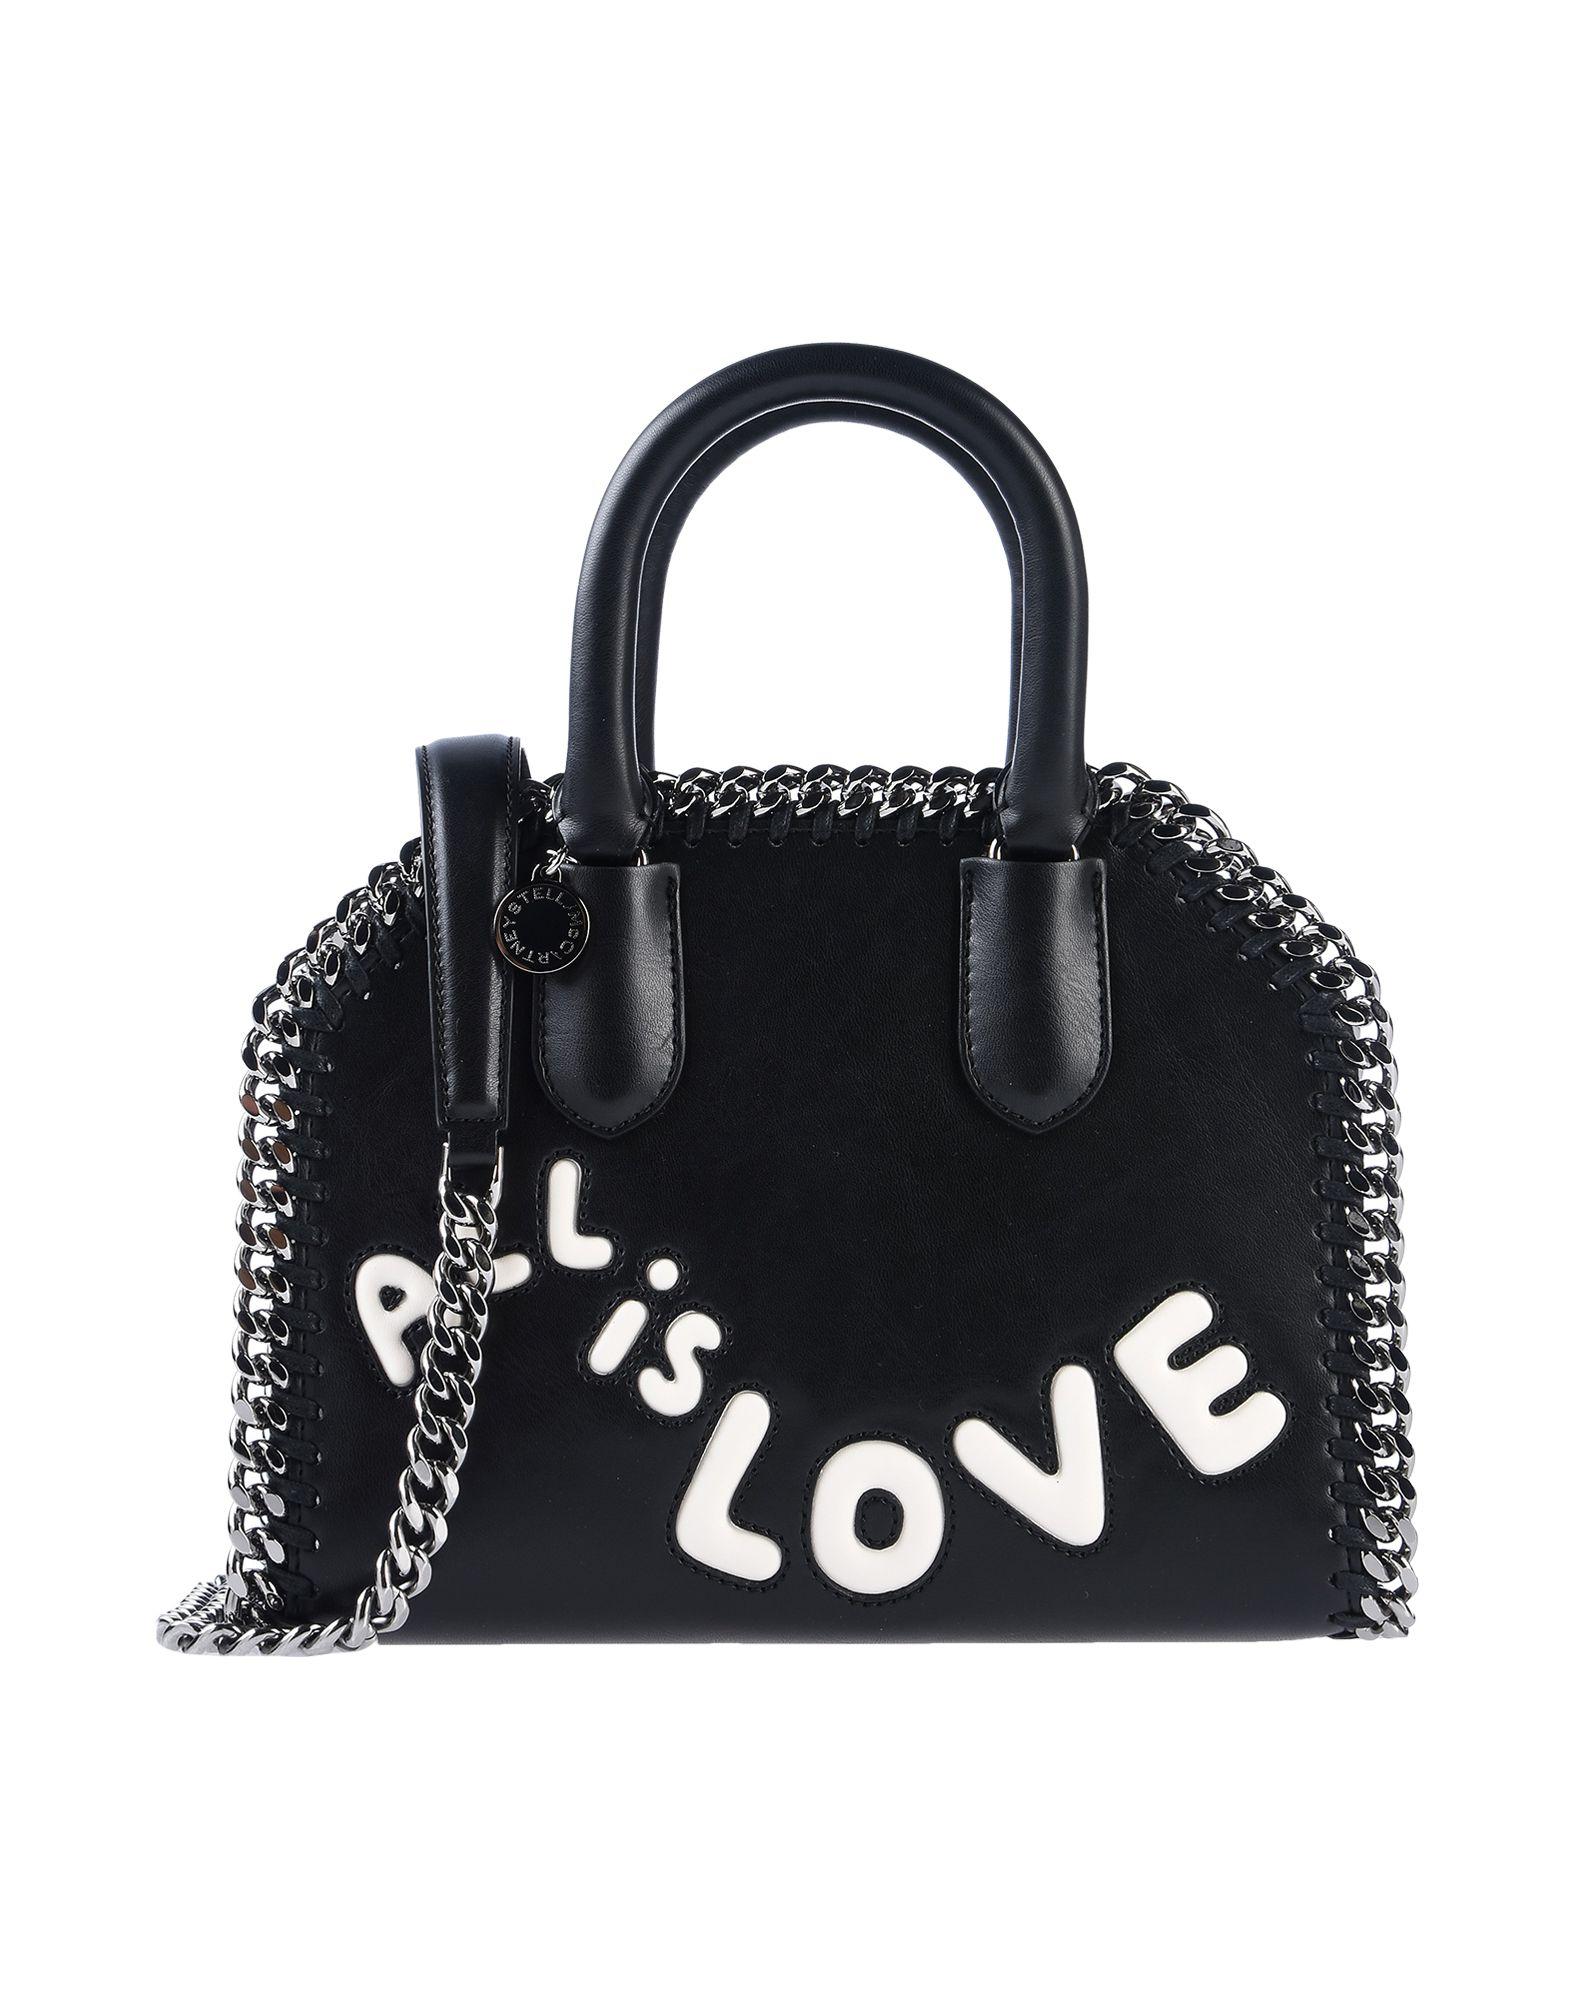 Stella McCartney Handbag in Black - Save 19% - Lyst